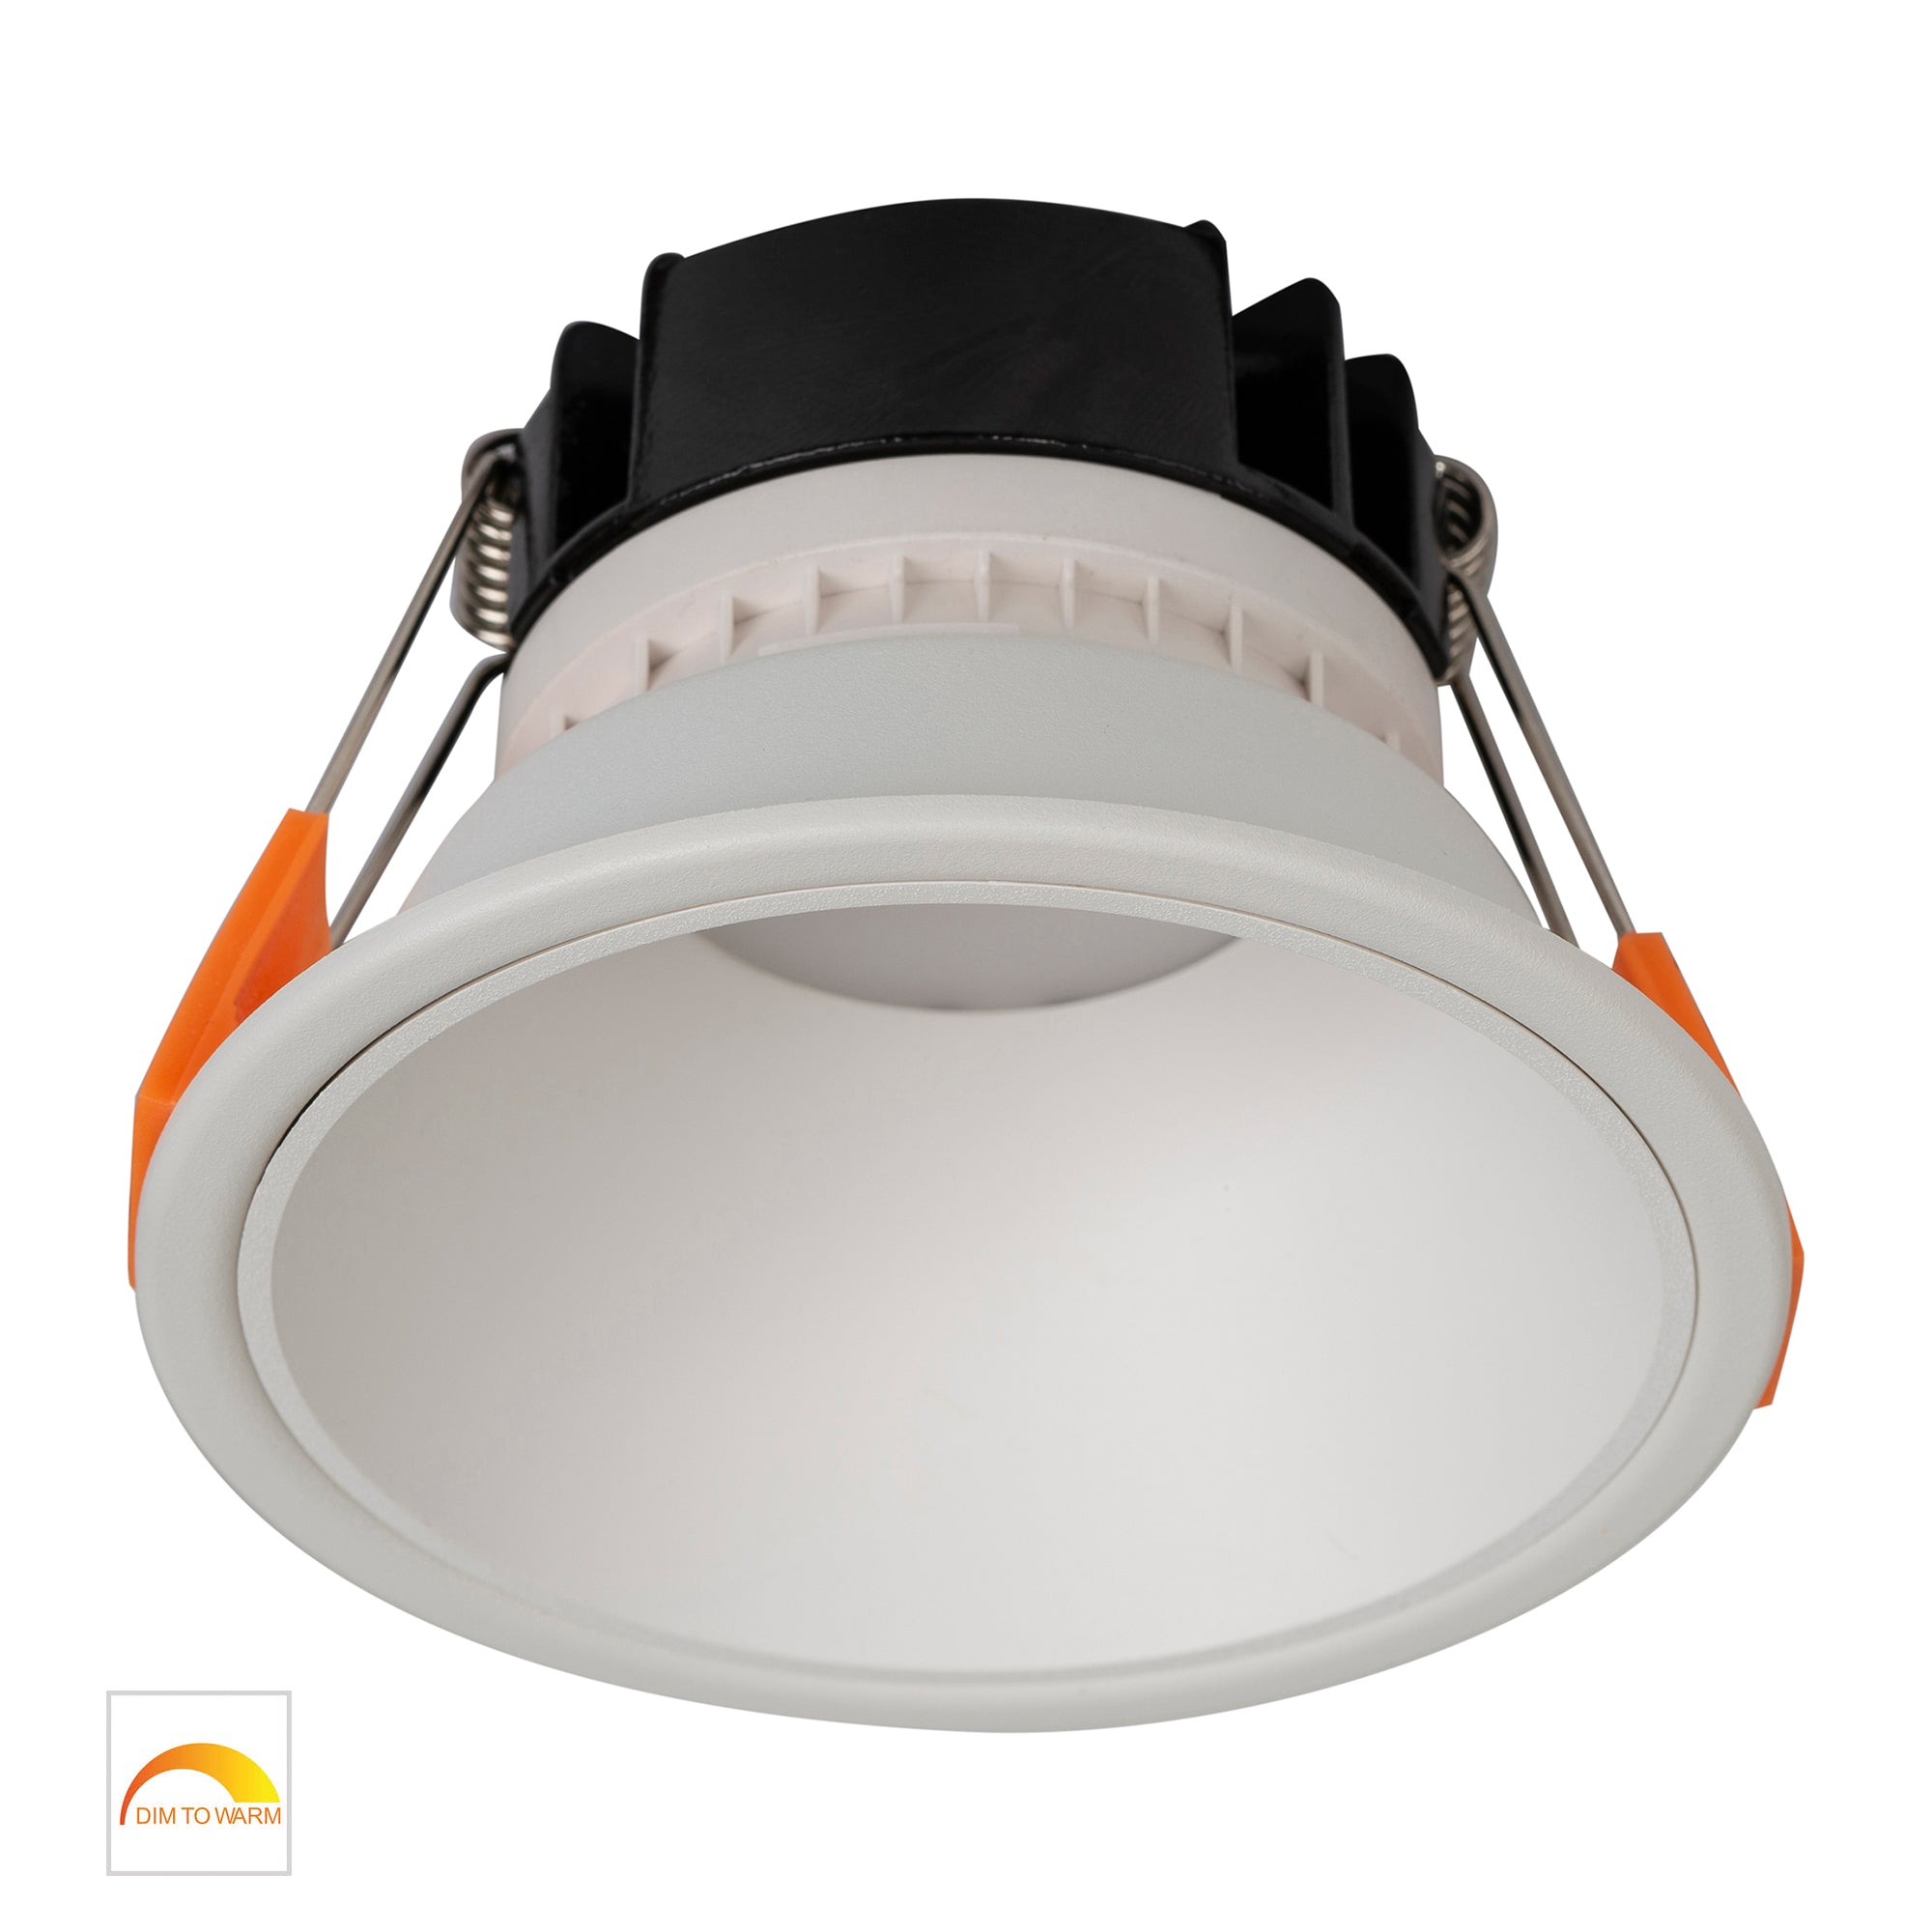 HV5528D2W-WW - Gleam White with White Insert Fixed Dim to Warm LED Downlight